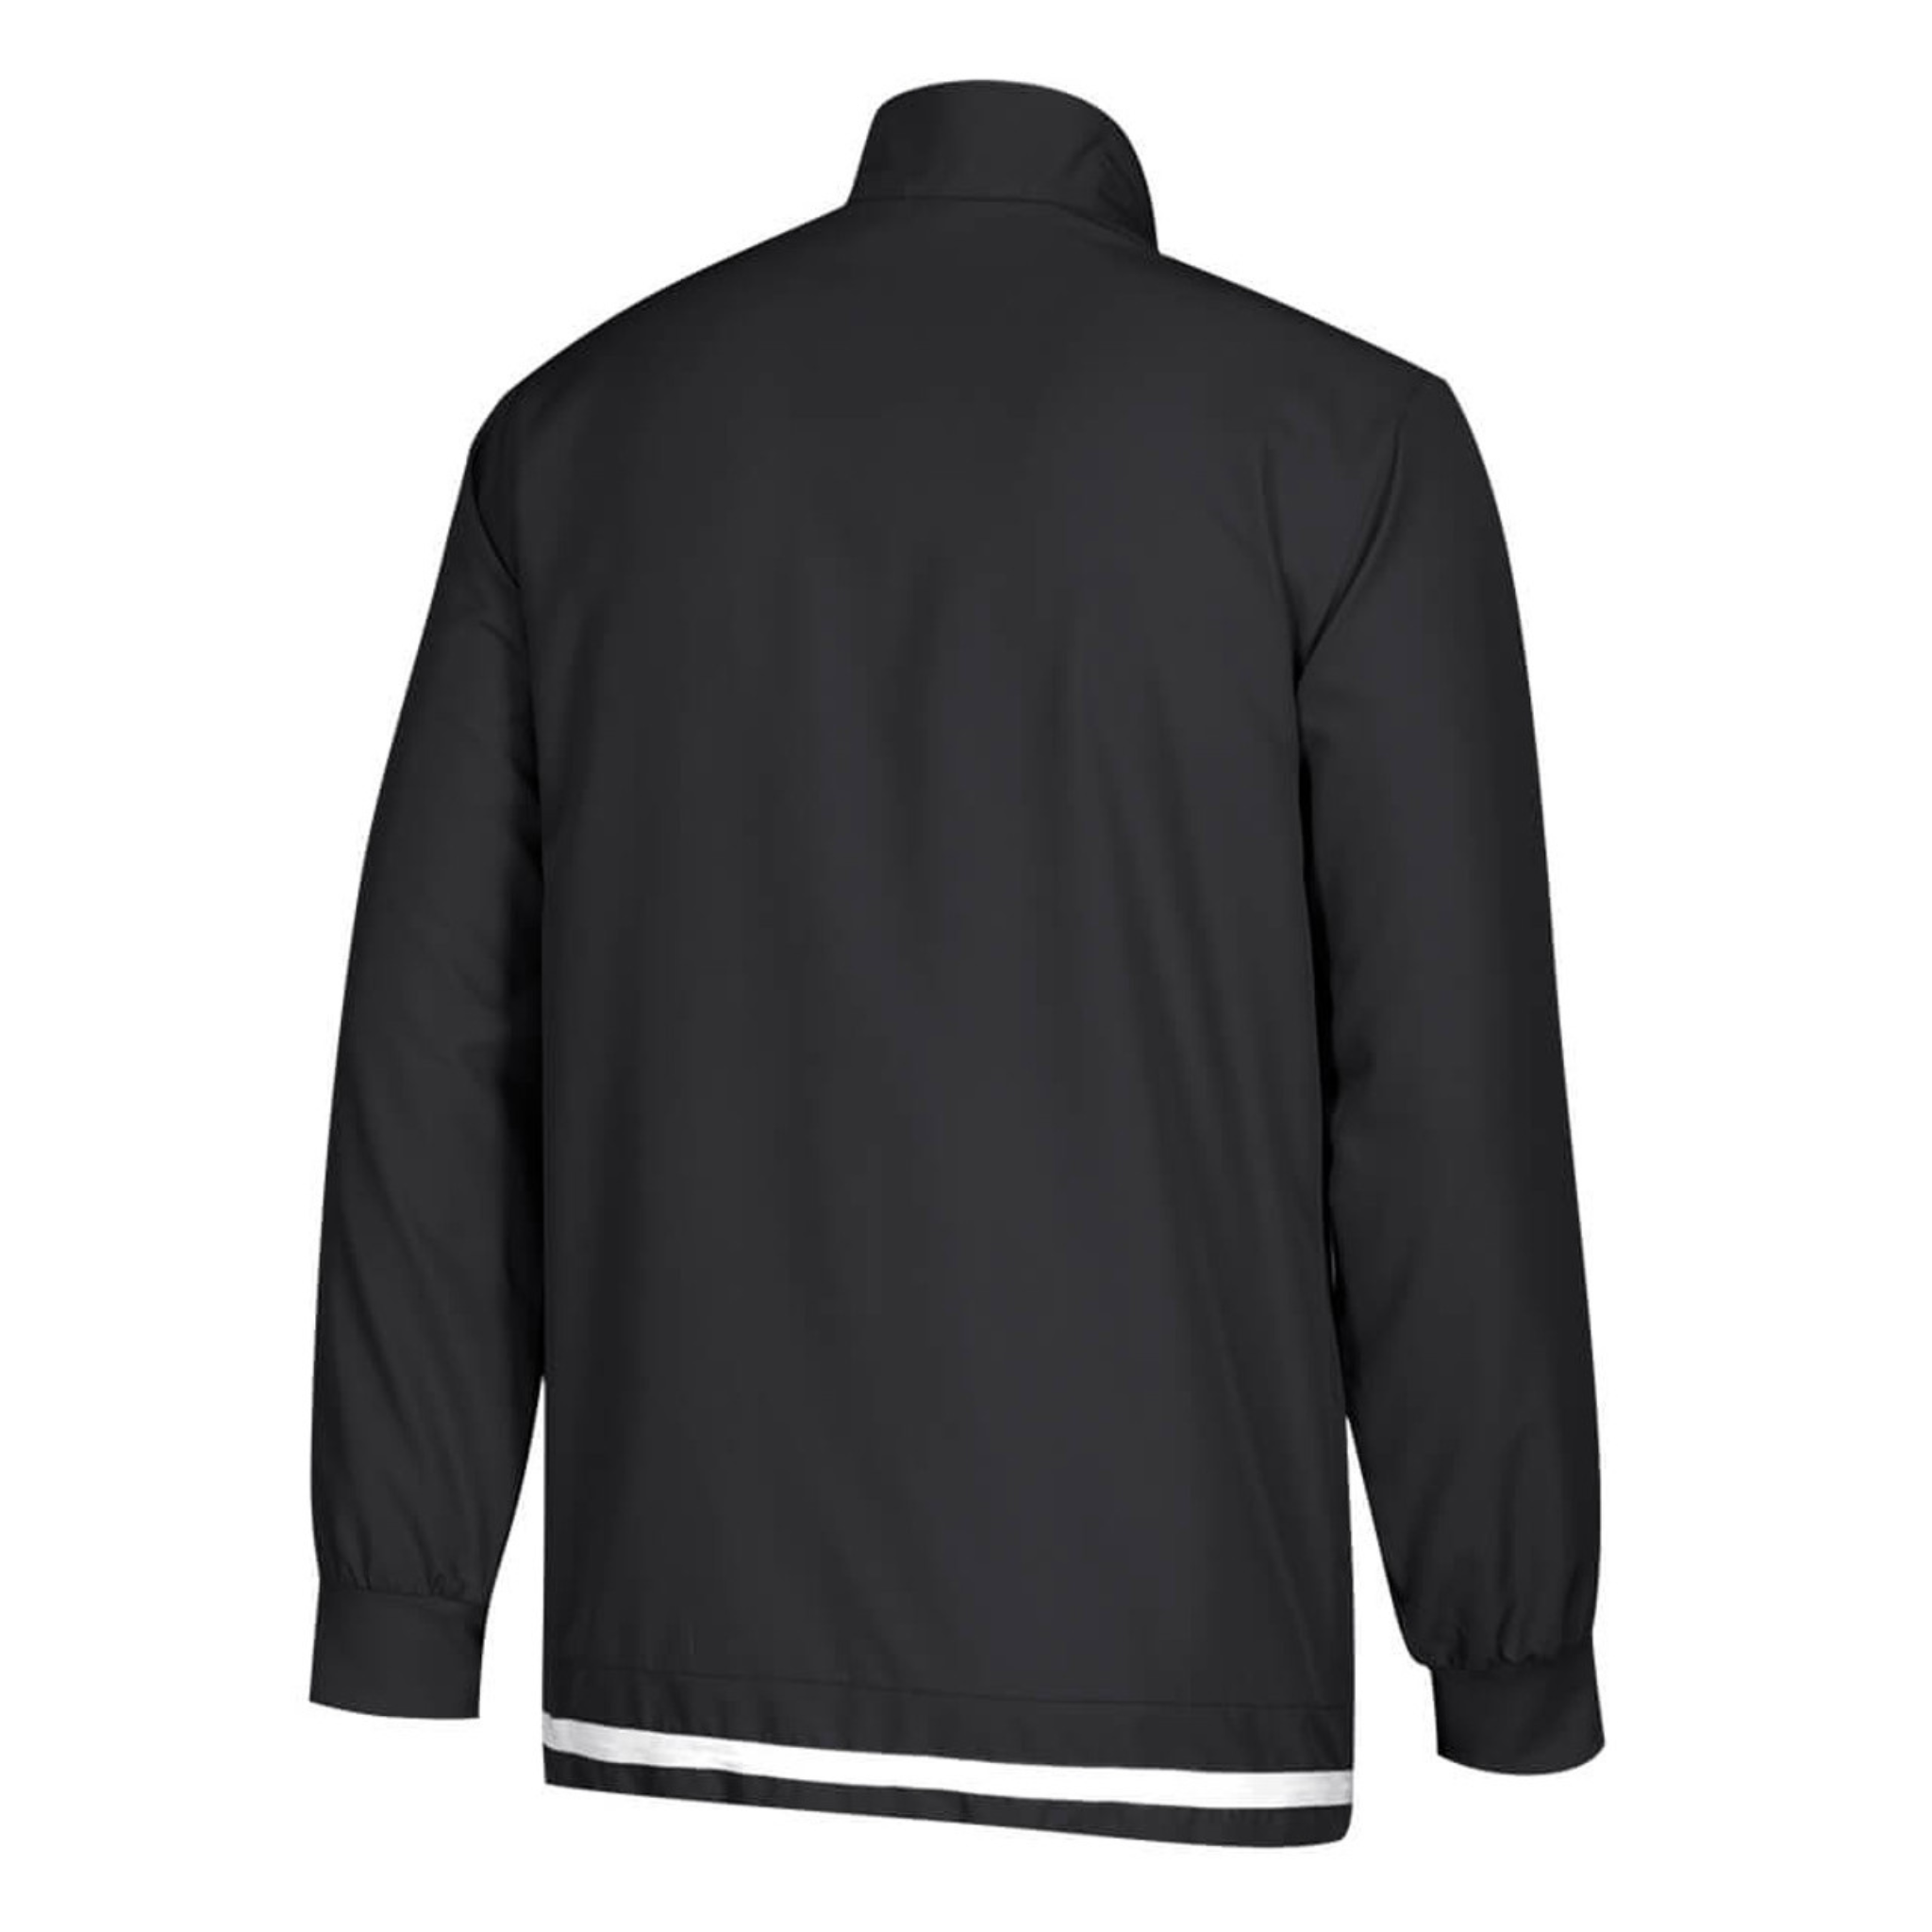 Adidas T19 Men's Woven Jacket > Black